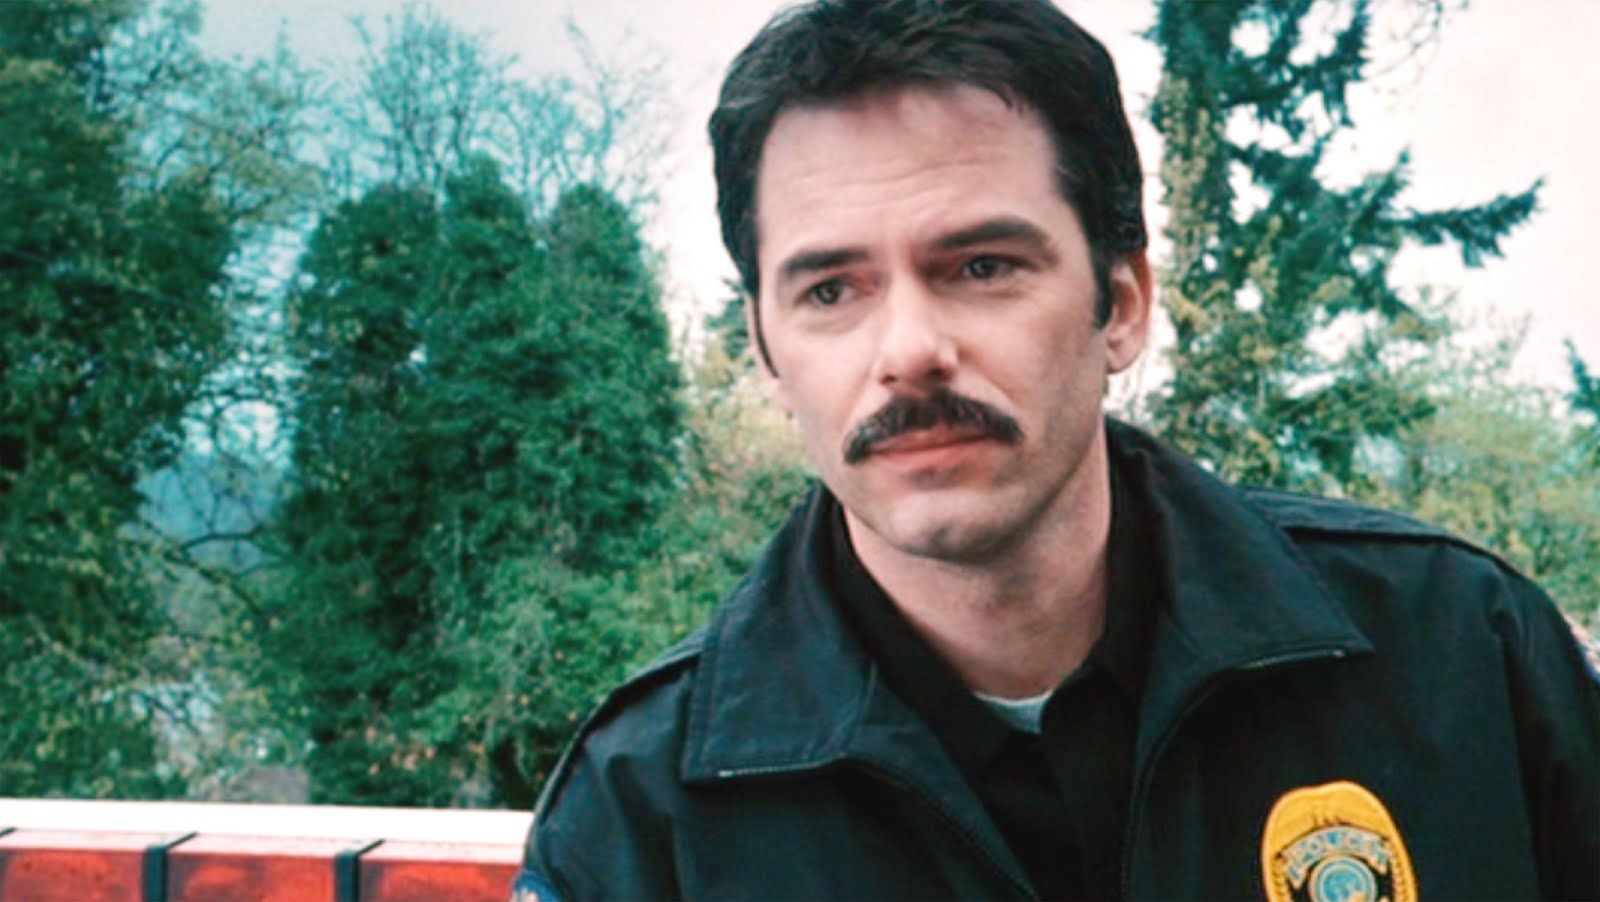 Billy Burke as Charlie Swan wearing his police uniform in Twilight (2008)